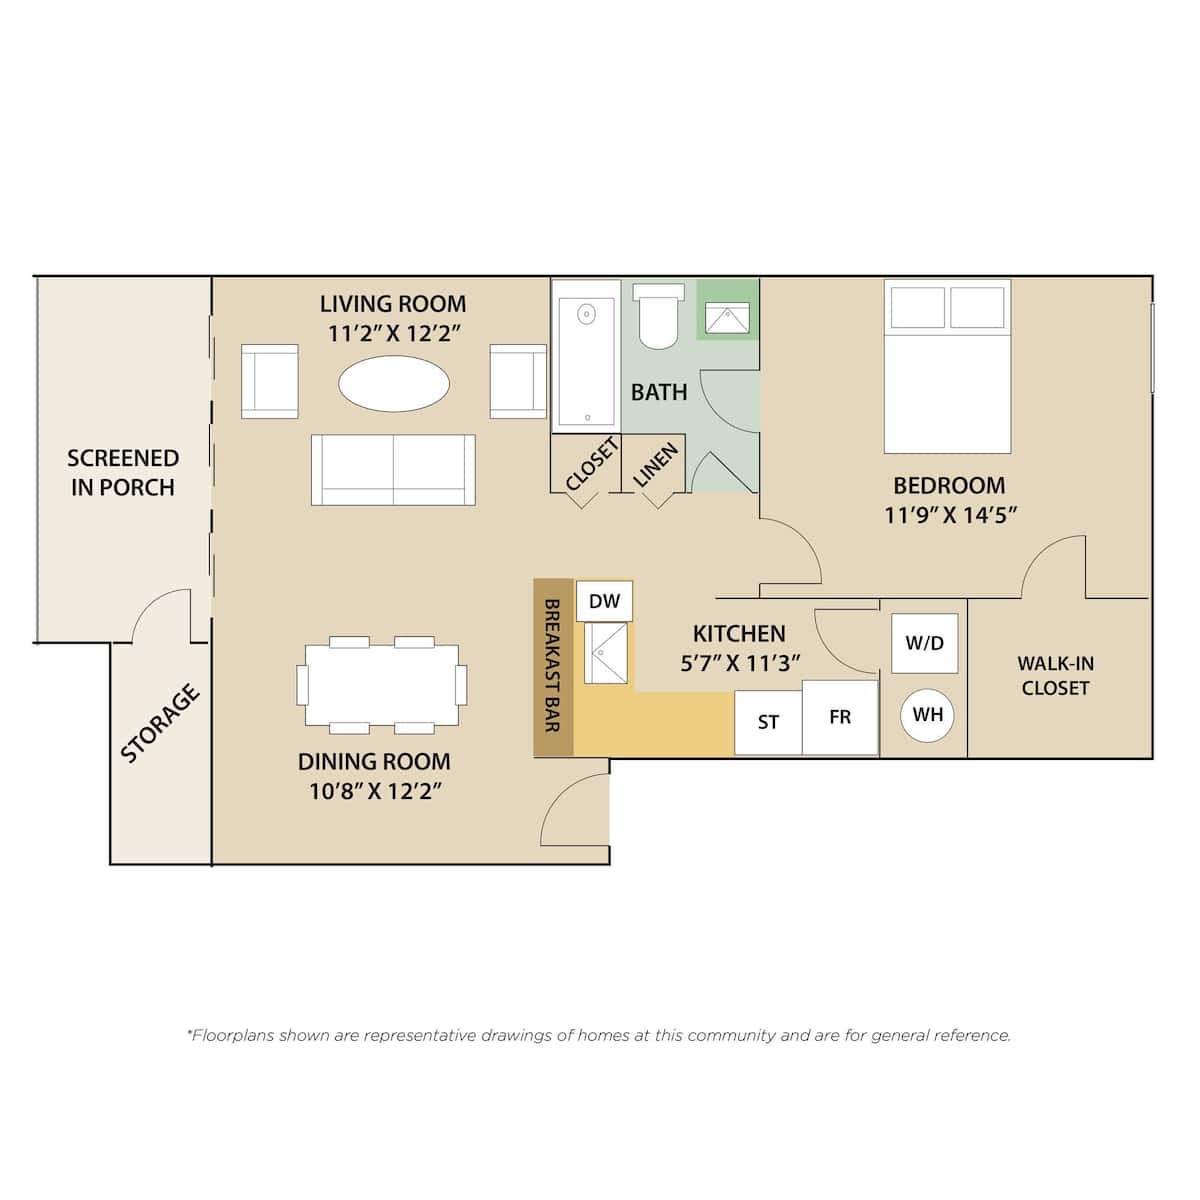 Floorplan diagram for Cordova, showing 1 bedroom